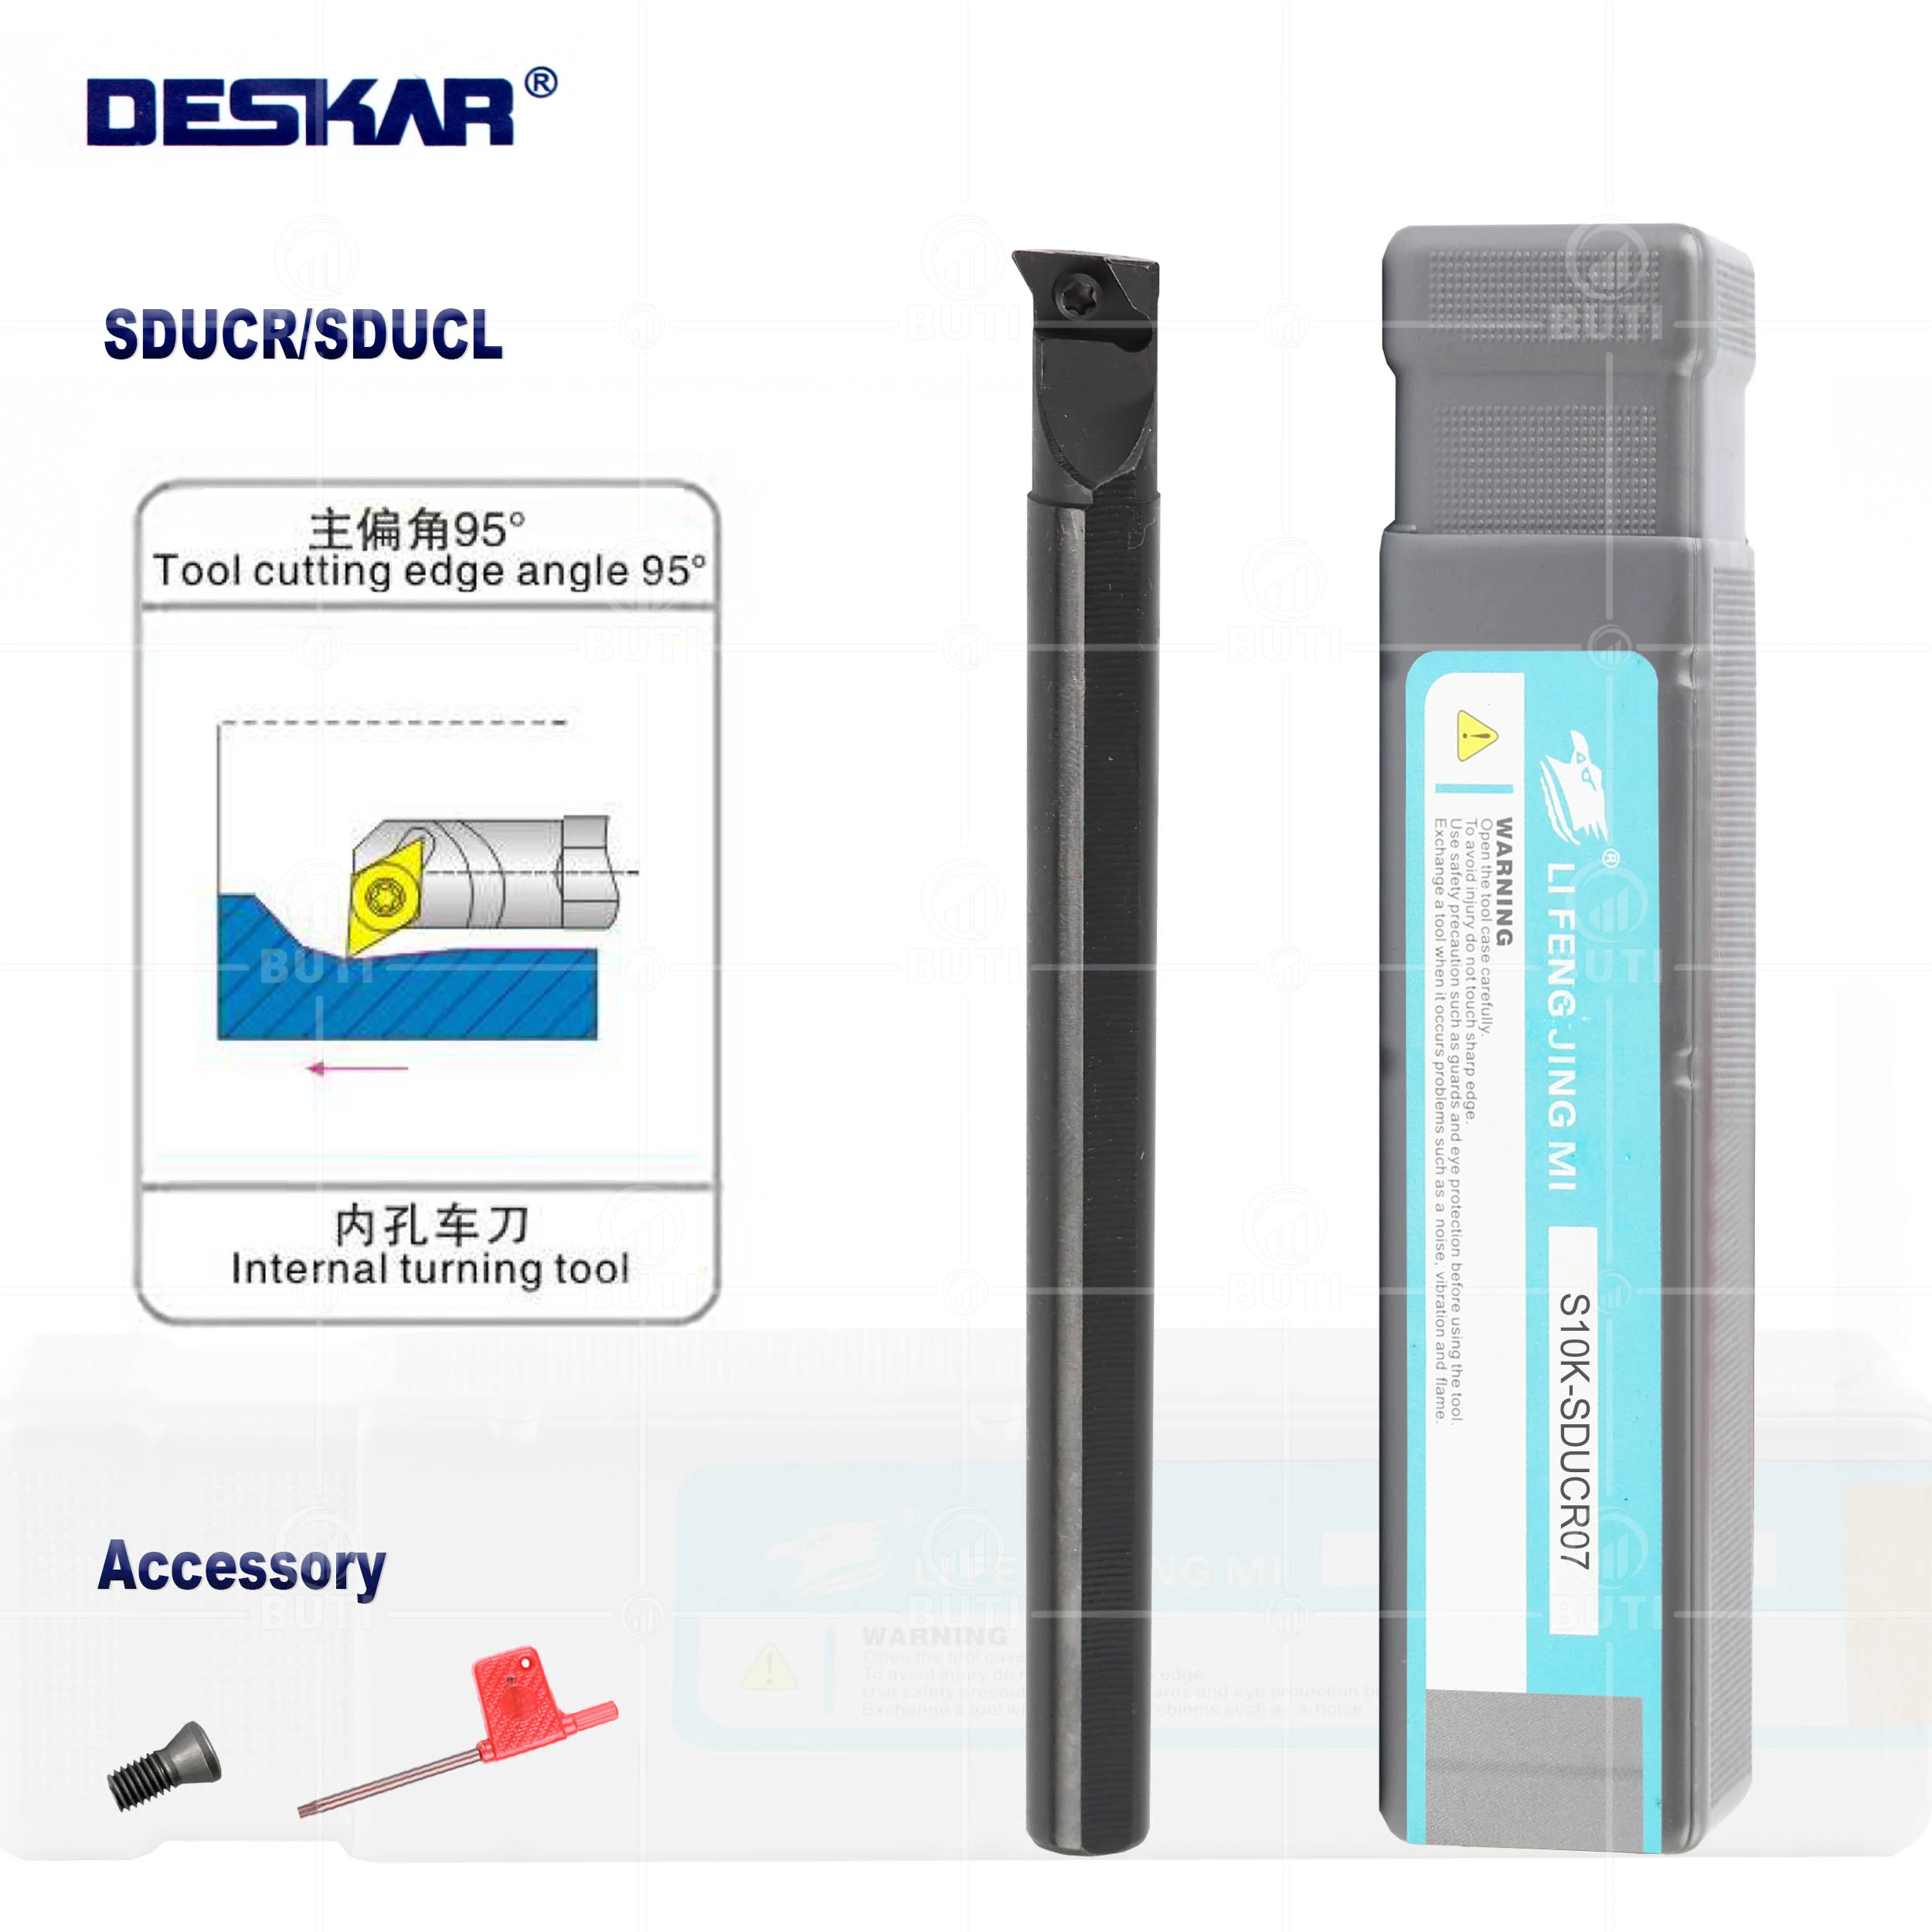 

DESKAR 100% Original Internal Turning Tools Holder S08K S10K S12M S16Q S20R S25S SDUCR/L Boring Bar Carbide Inserts Lathe Cutter